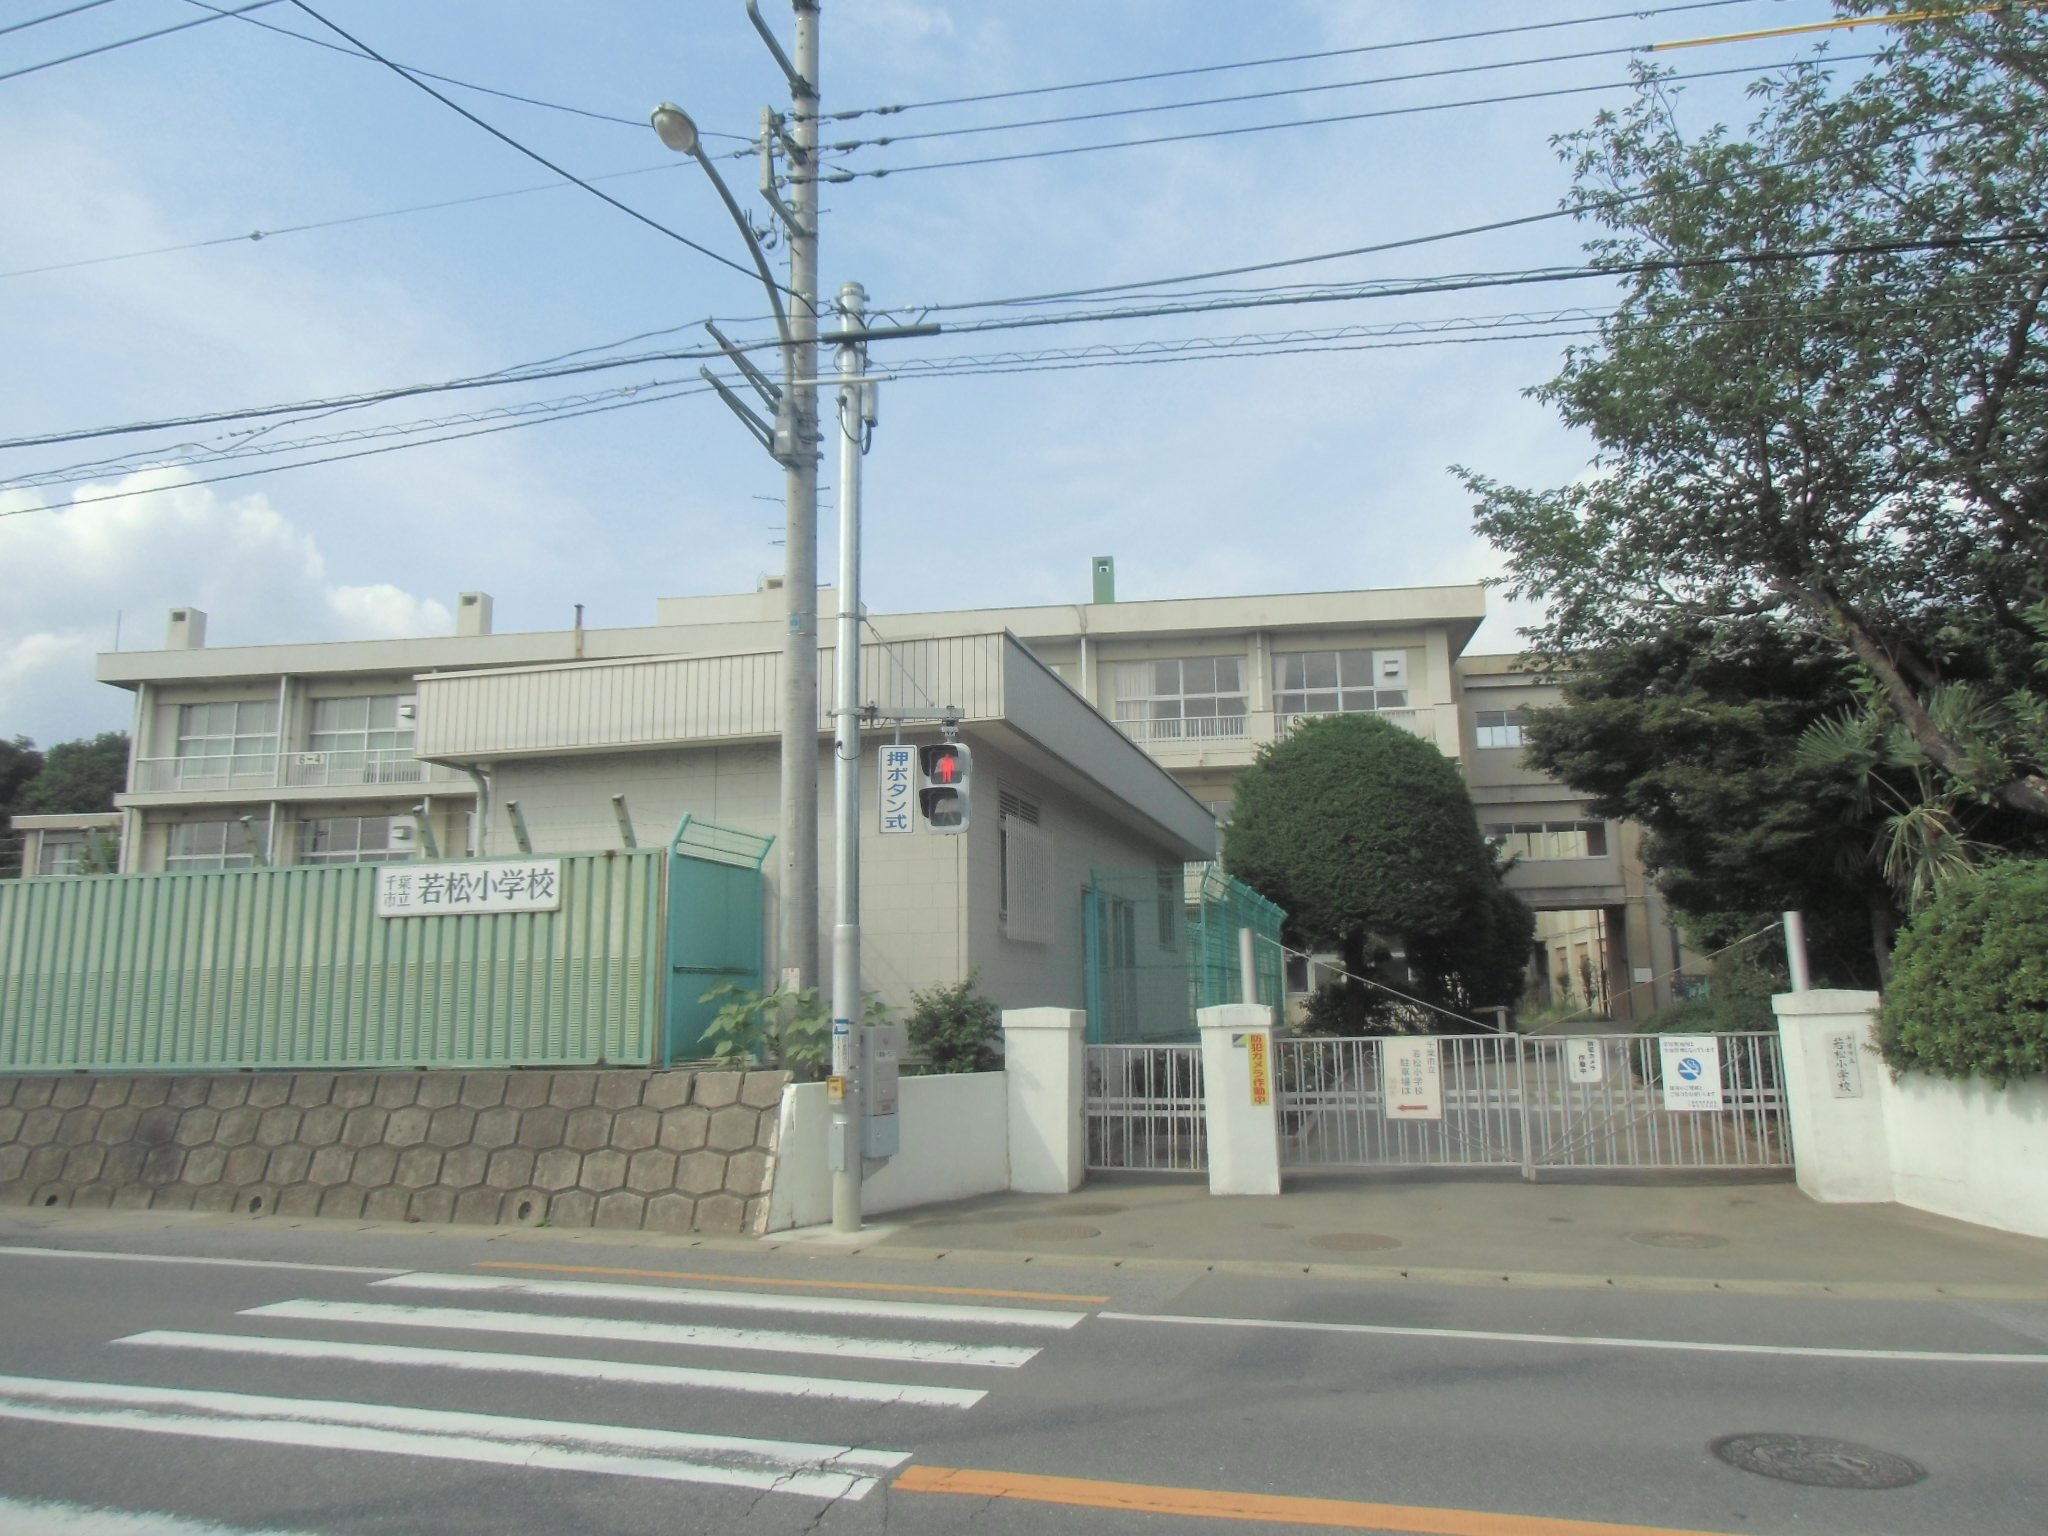 Primary school. 967m until the Chiba Municipal Wakamatsu elementary school (elementary school)